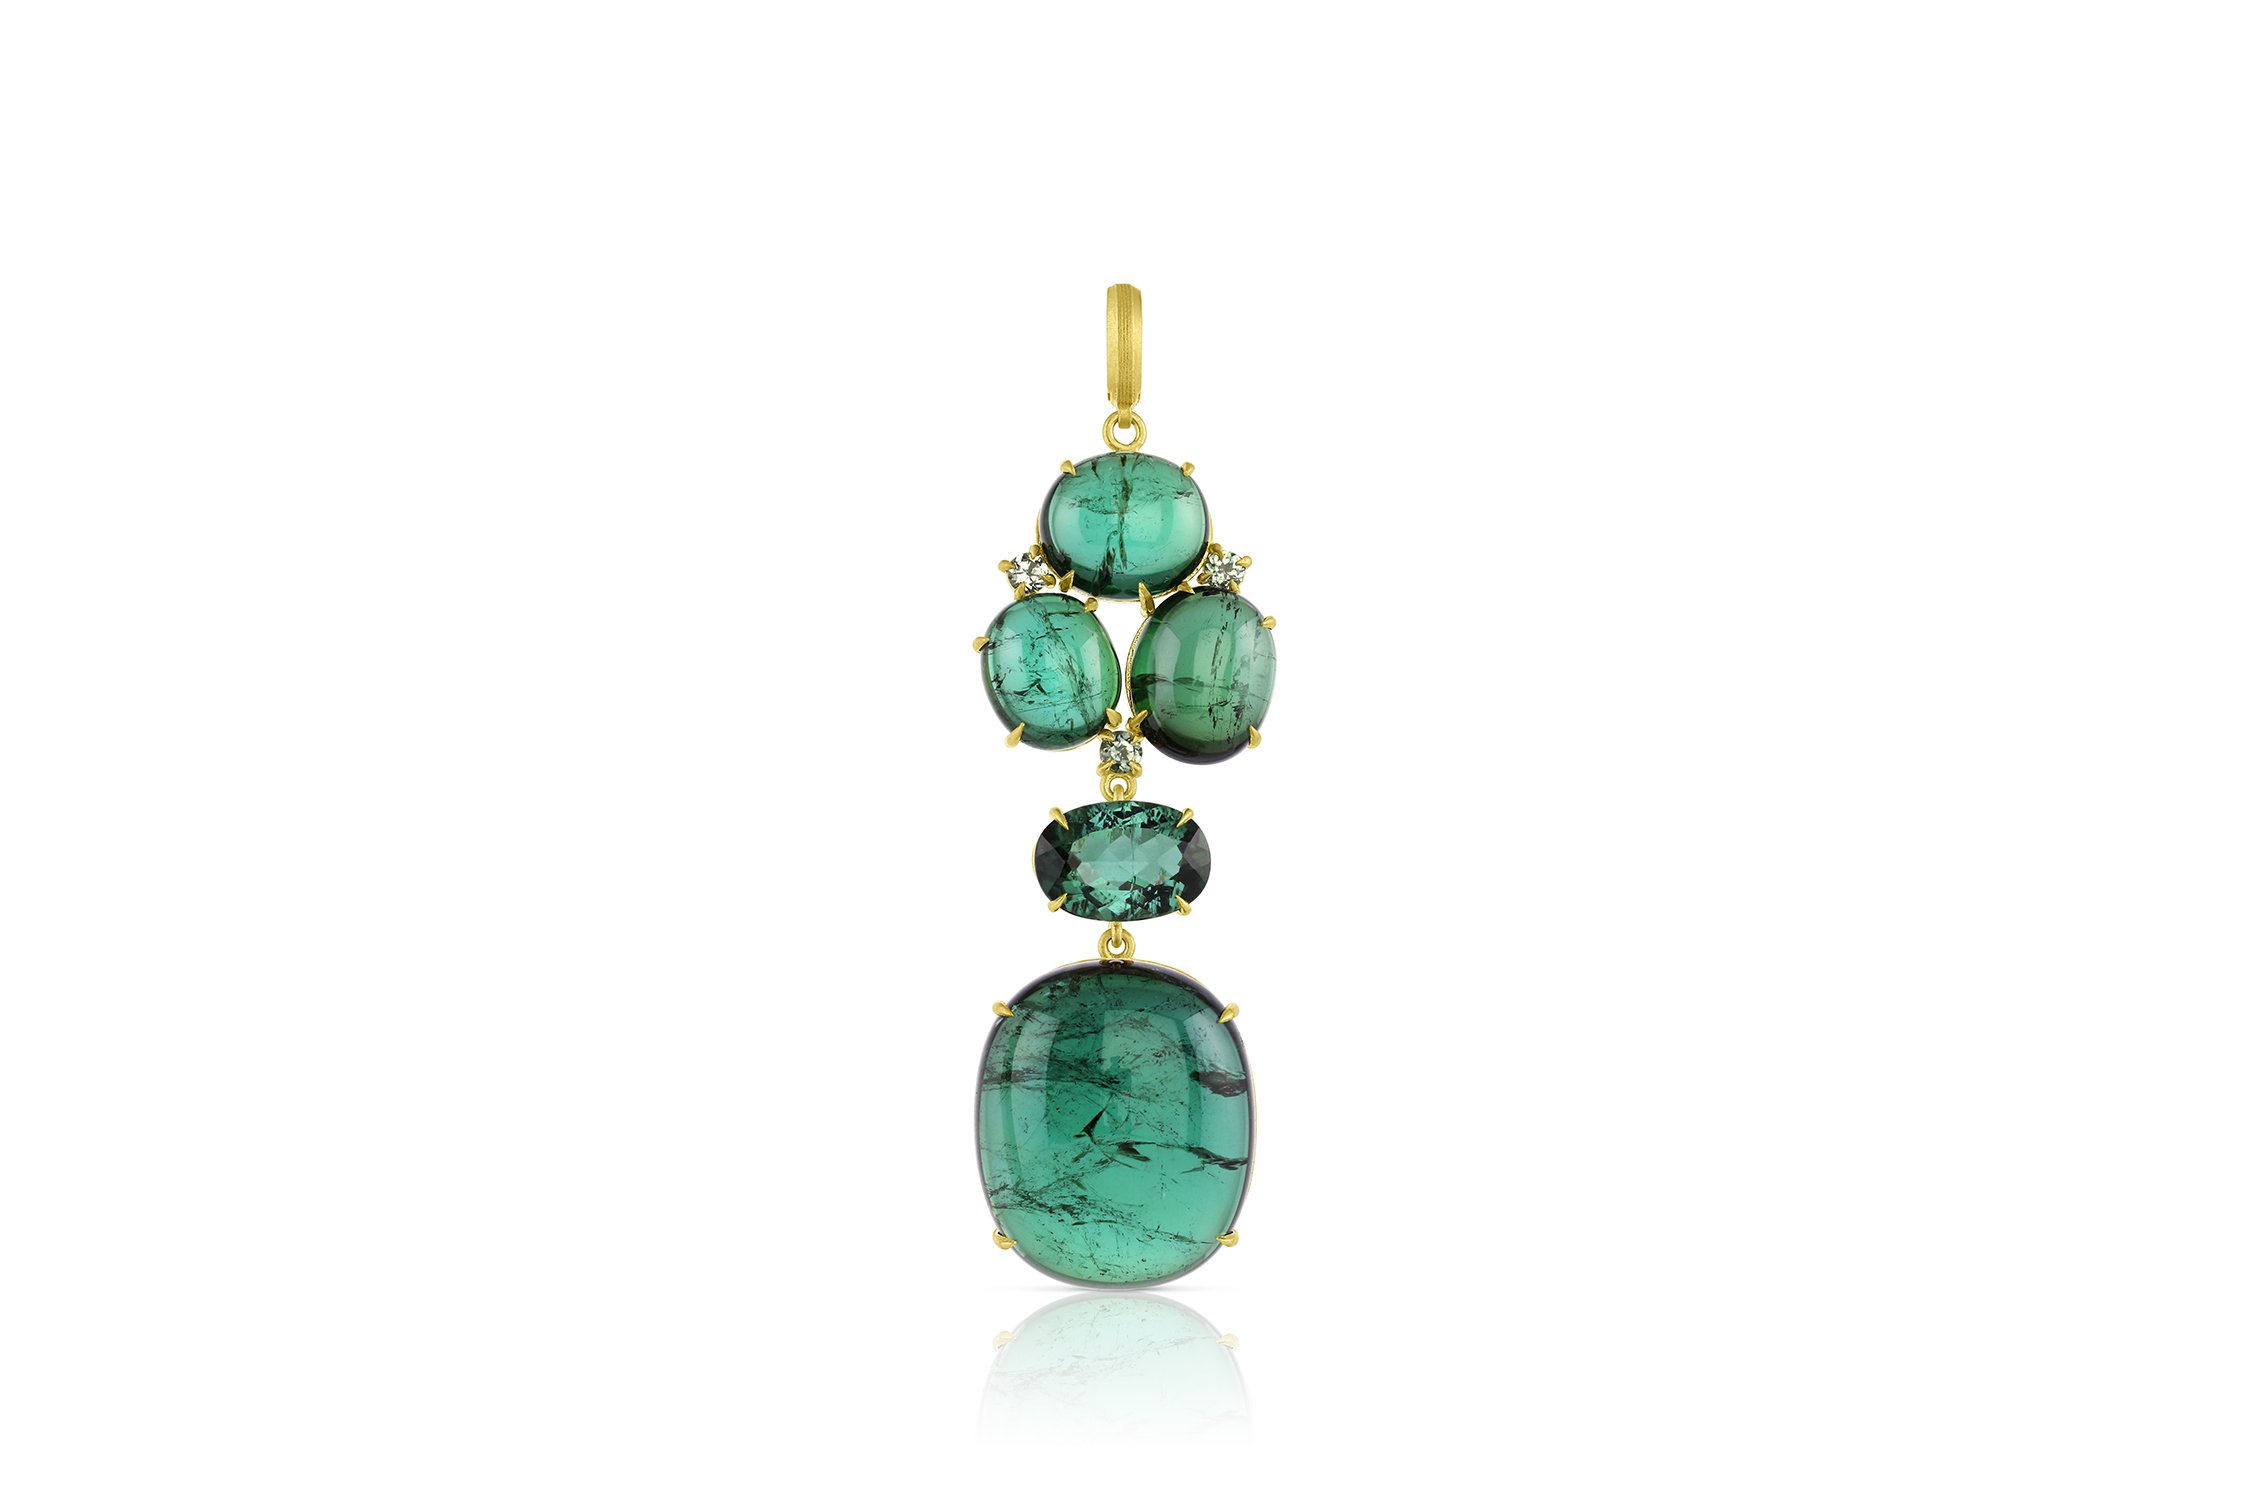 Green tourmaline and green sapphire pendant